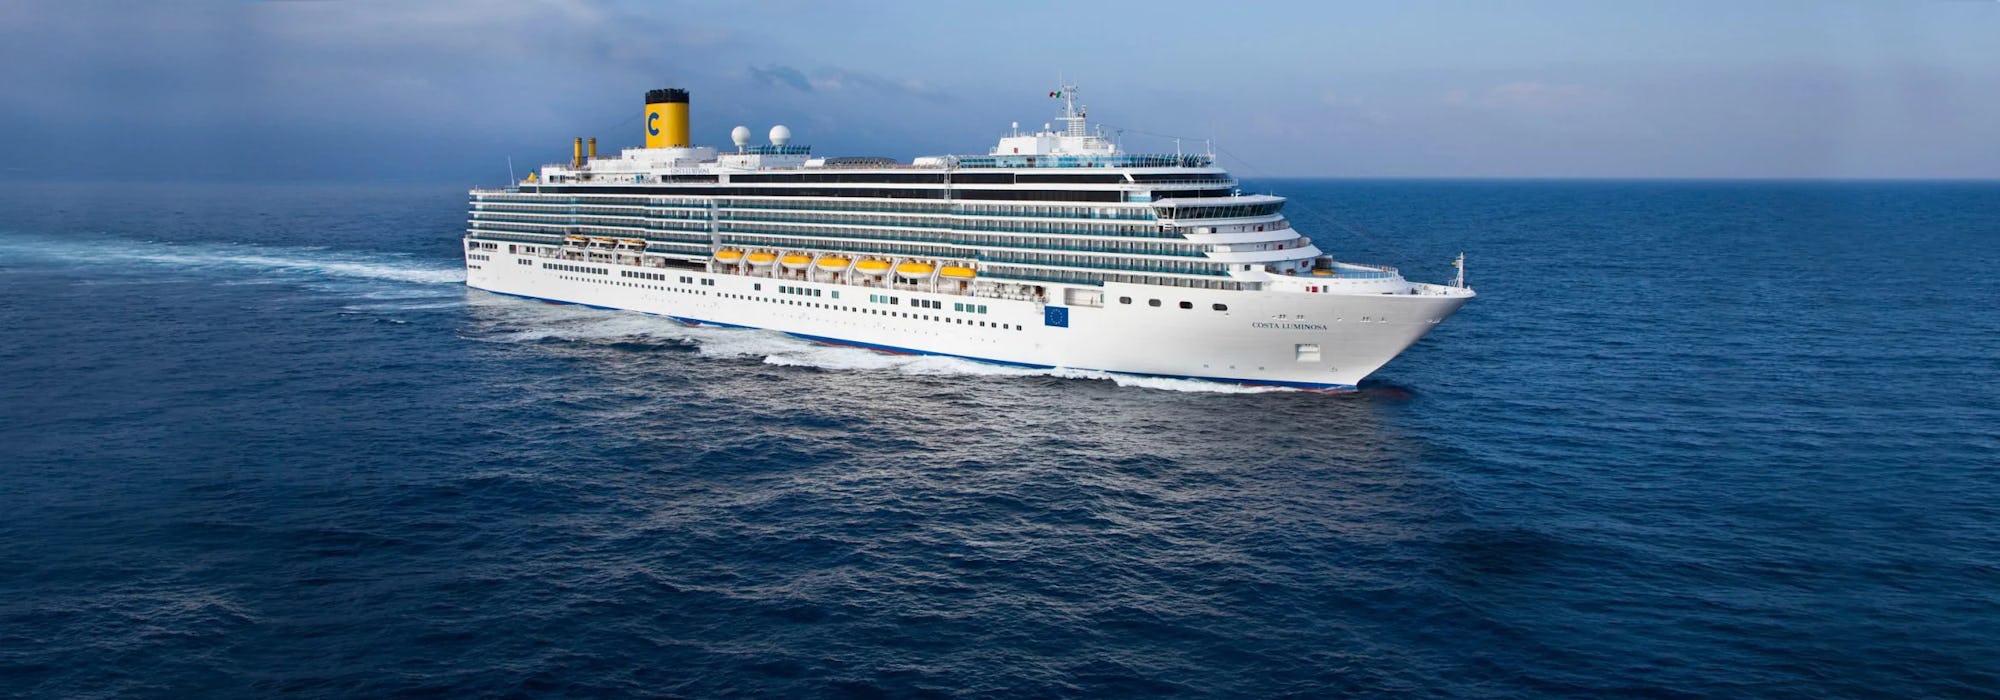 Costa Luminosa - Costa Cruises